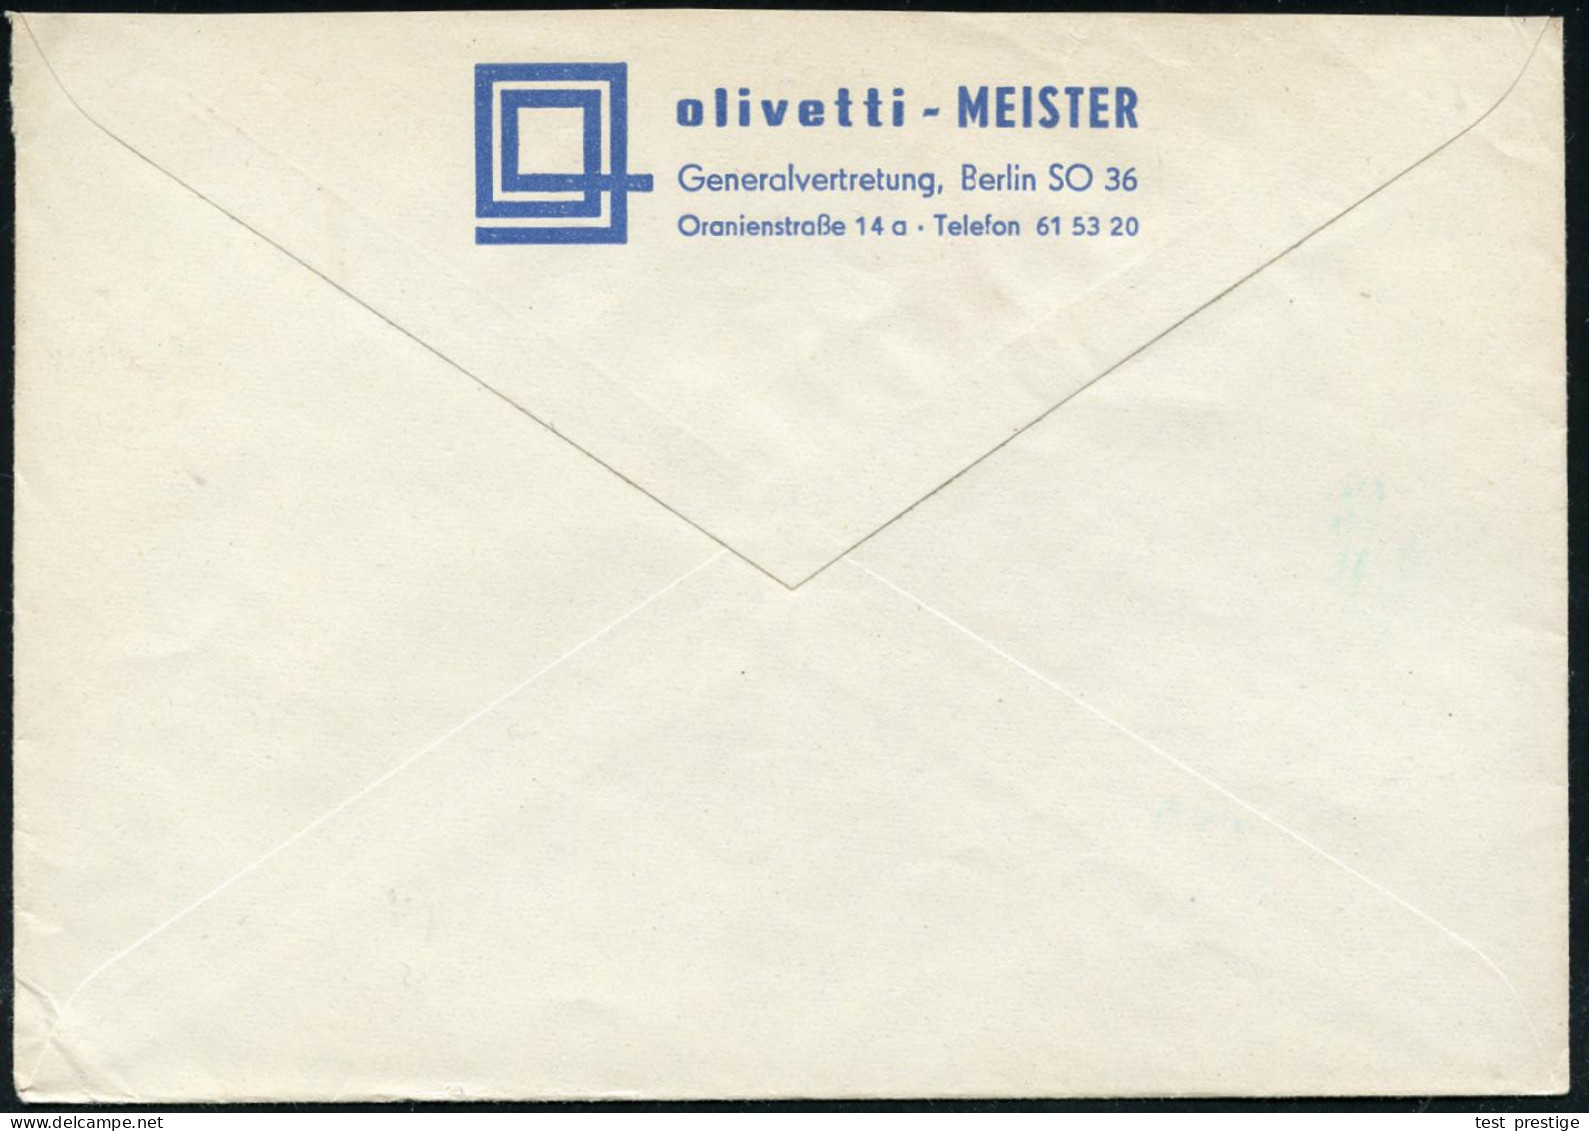 (1) BERLIN SO 36/ Meister/ BÜROMASCHINEN/ Olivetti Generalvertretung 1960 (21.12.) AFS Postalia Auf Orts-Firmen-Bf., Rs, - Other